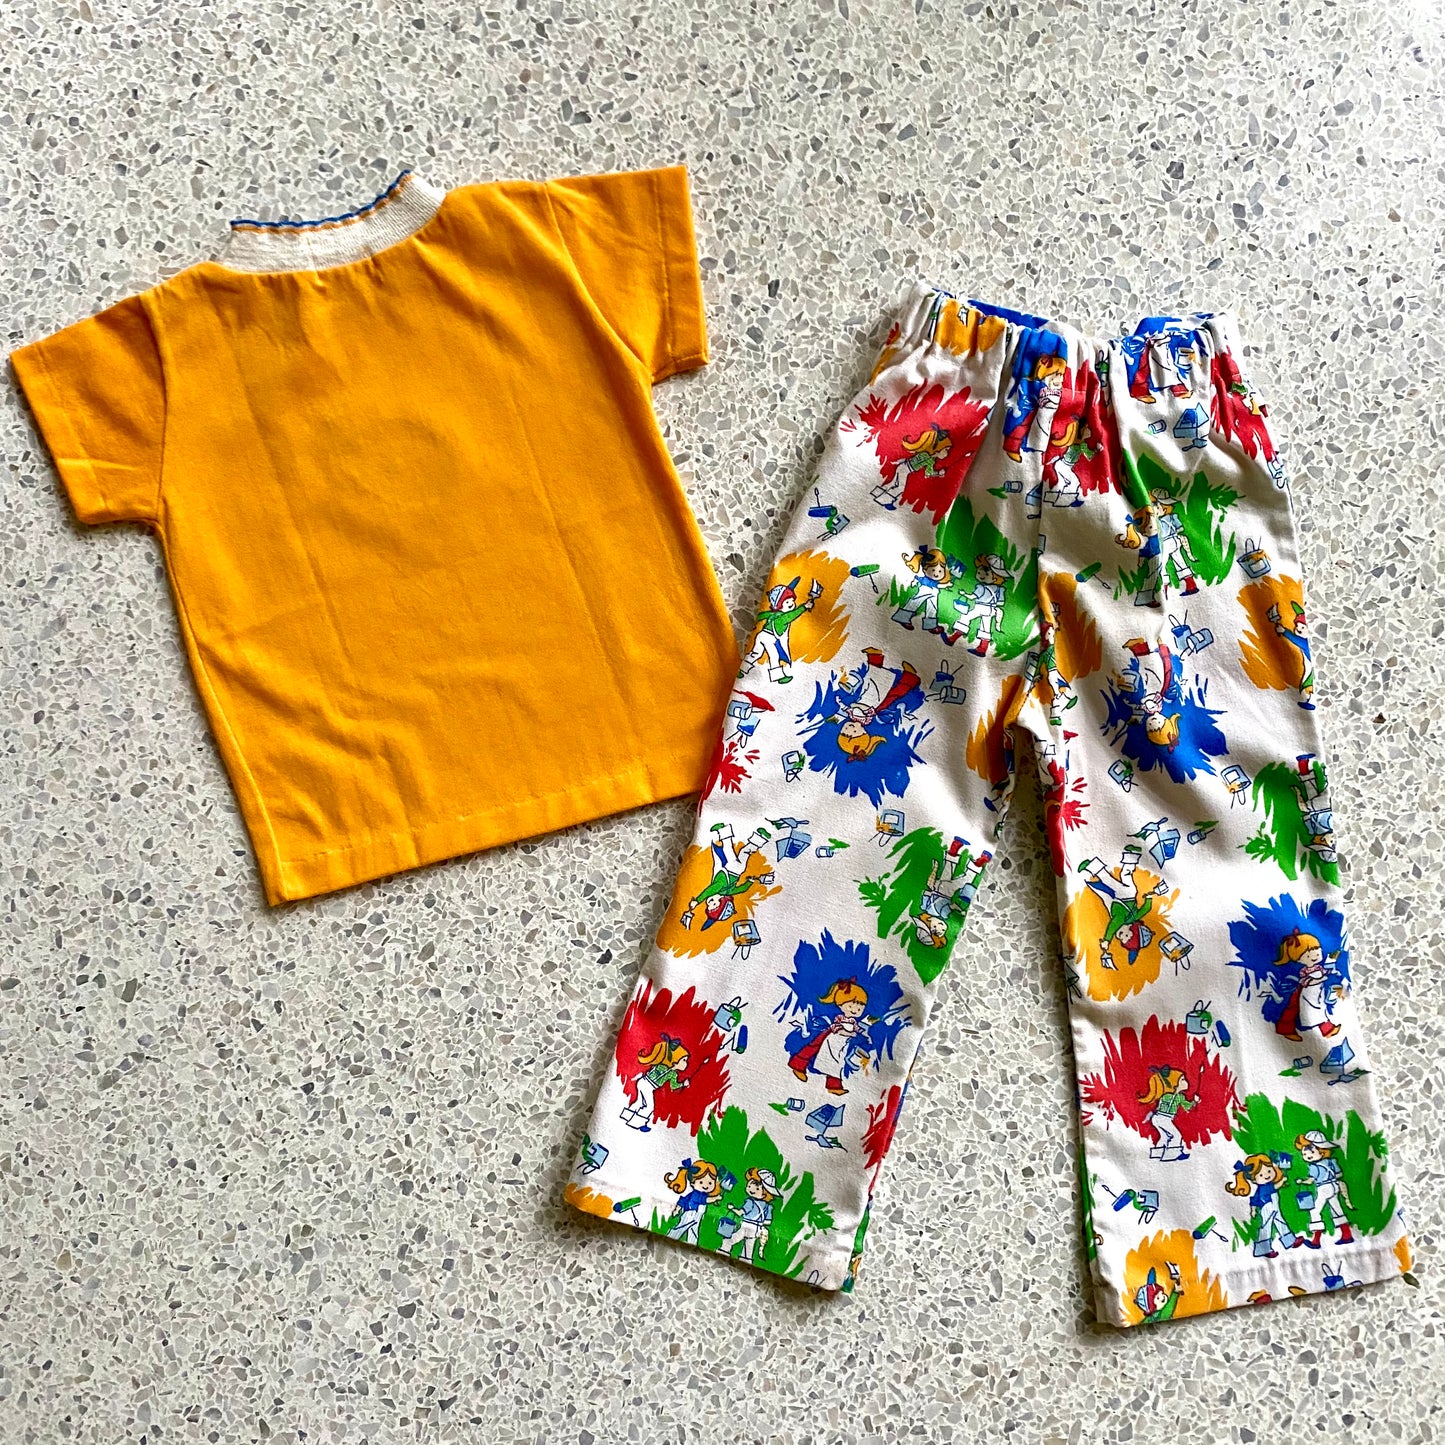 1960s Health-Tex Children's Shirt & Pants Set